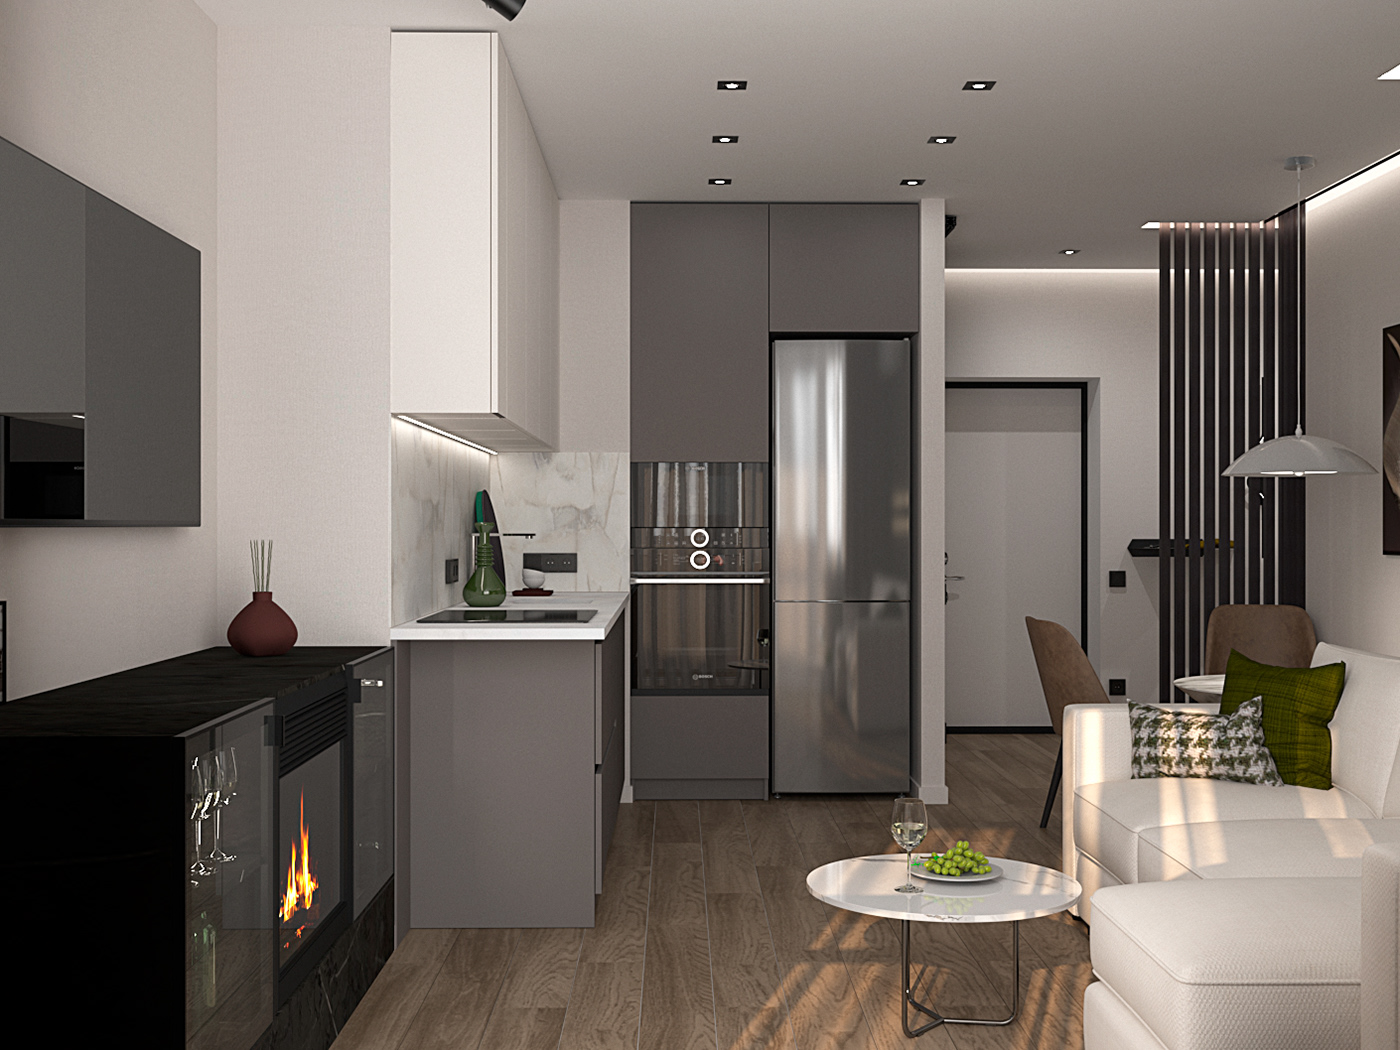 interiordesign visualization interior design  livingroom kitchen modern Render 3ds max bedroomdesign childrenroomdesign